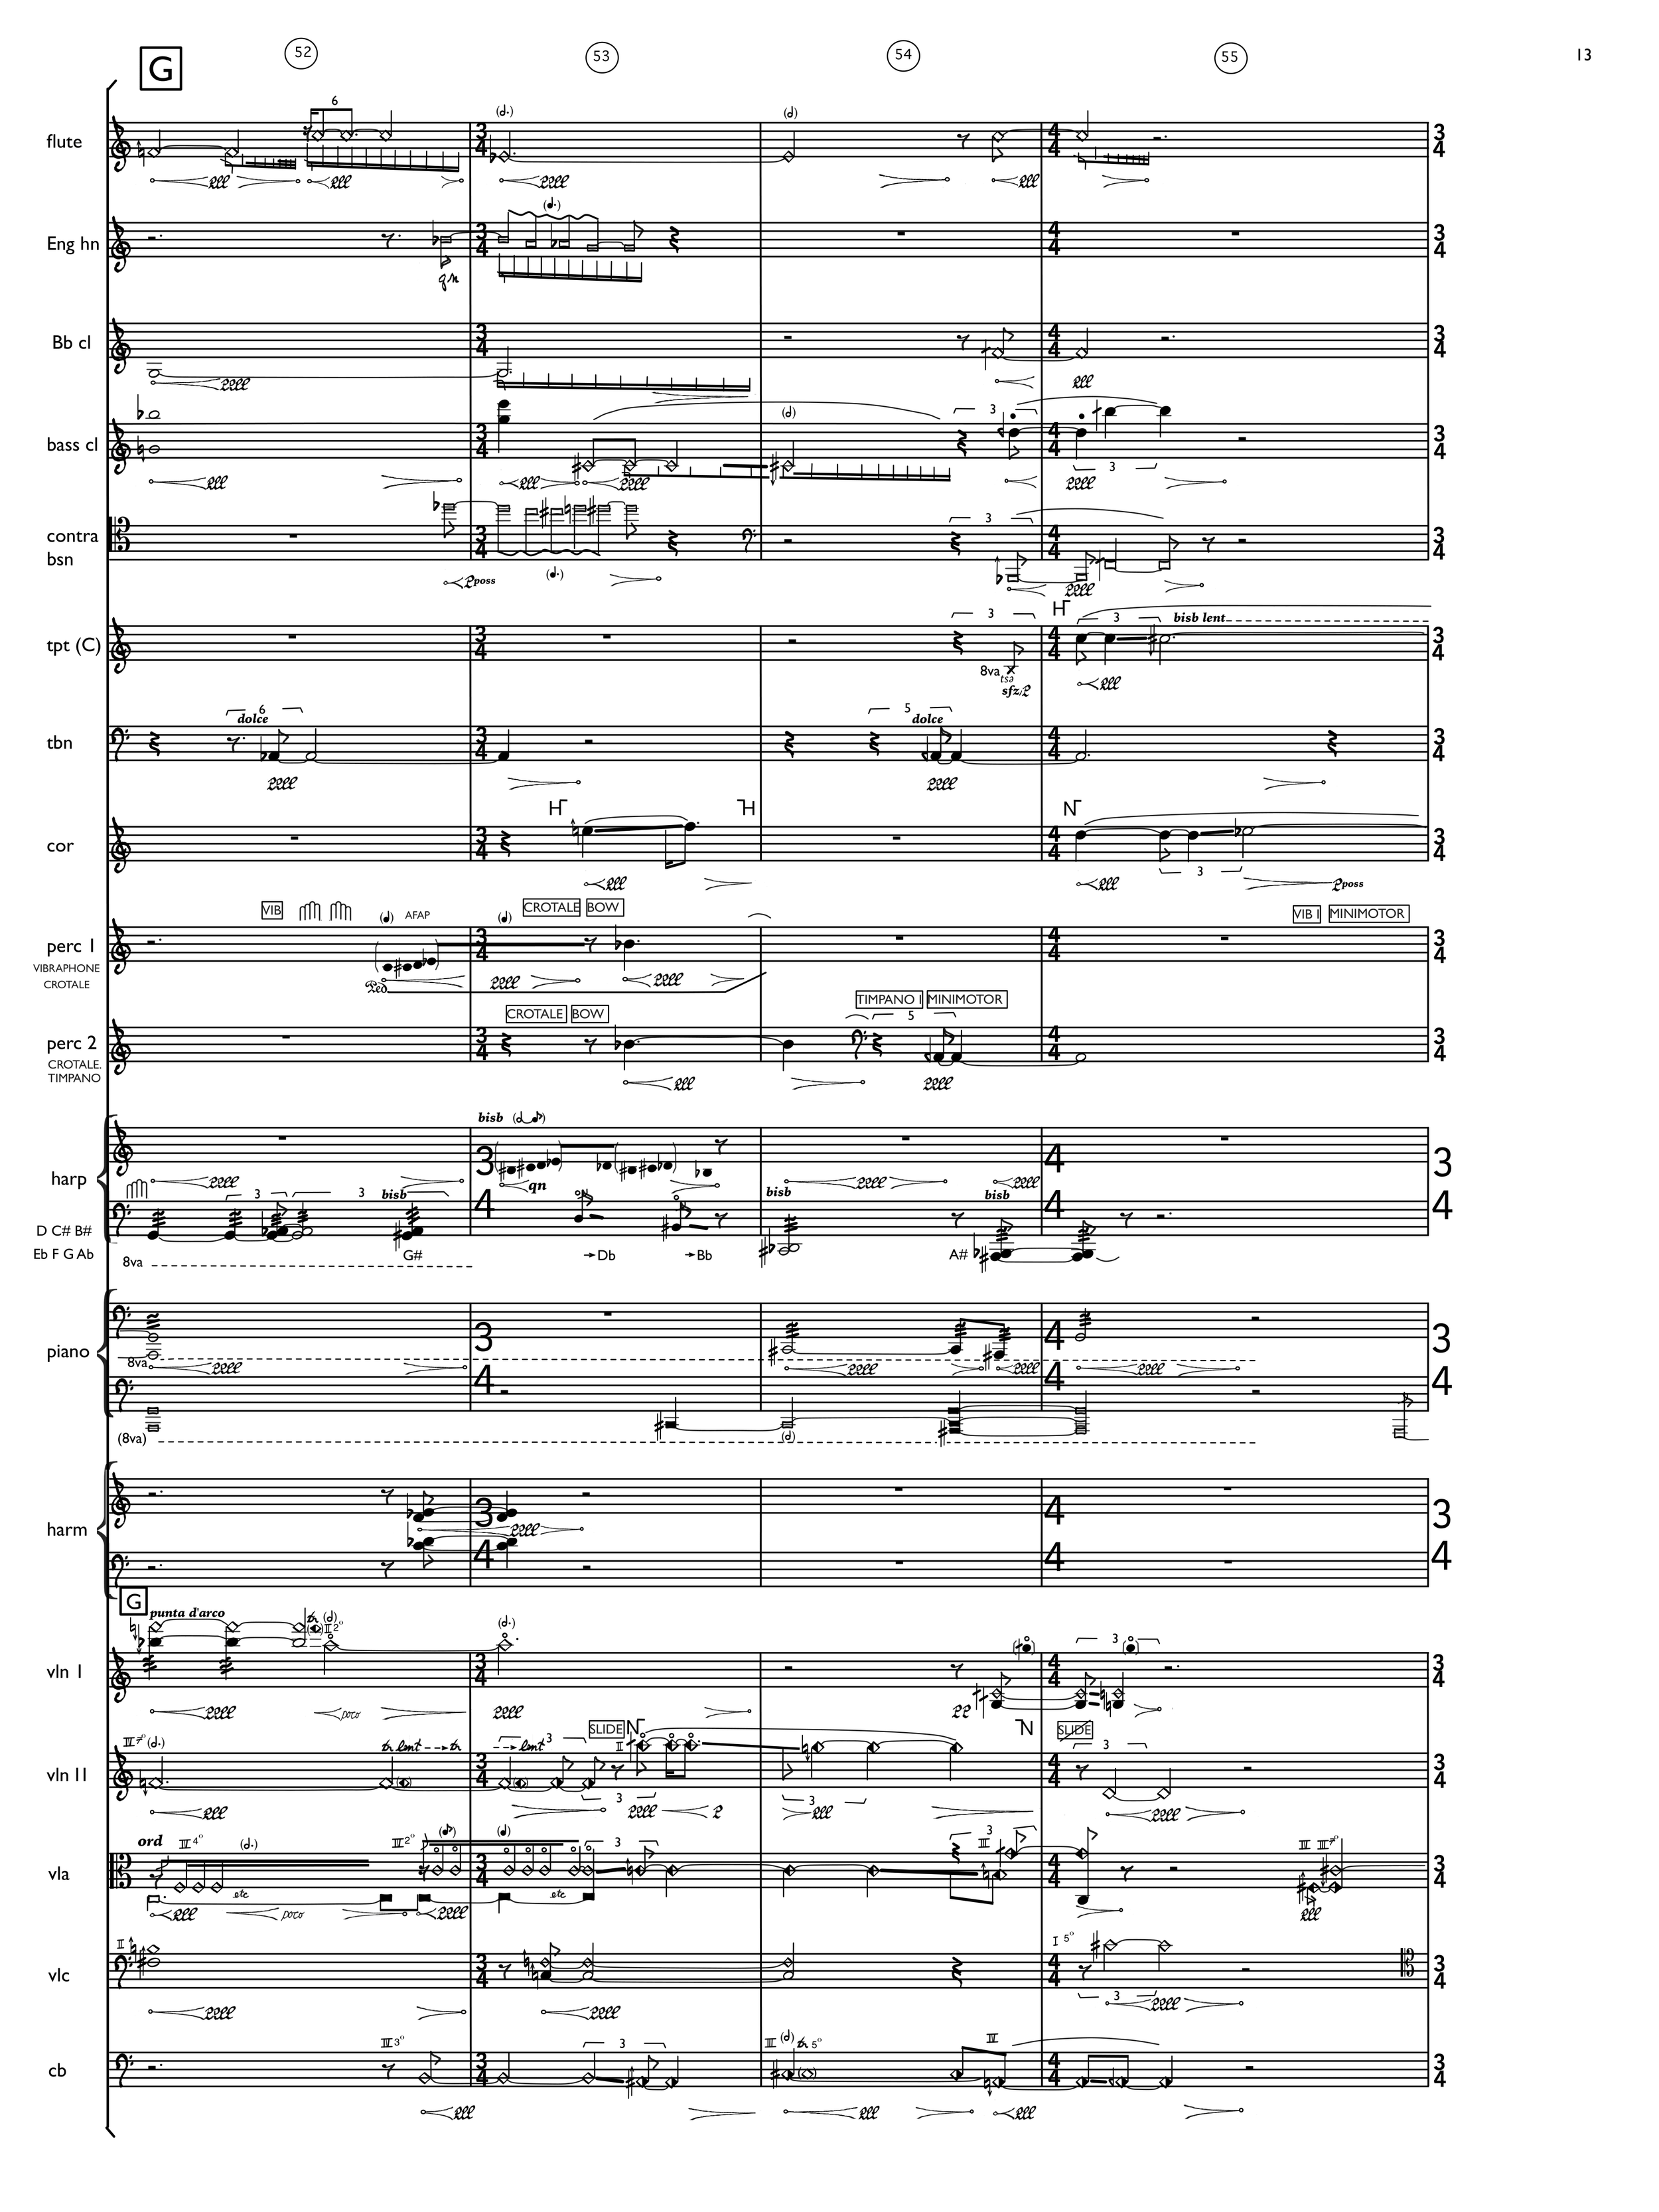 Alessandrini-Abhanden-00-score-notes-13.png